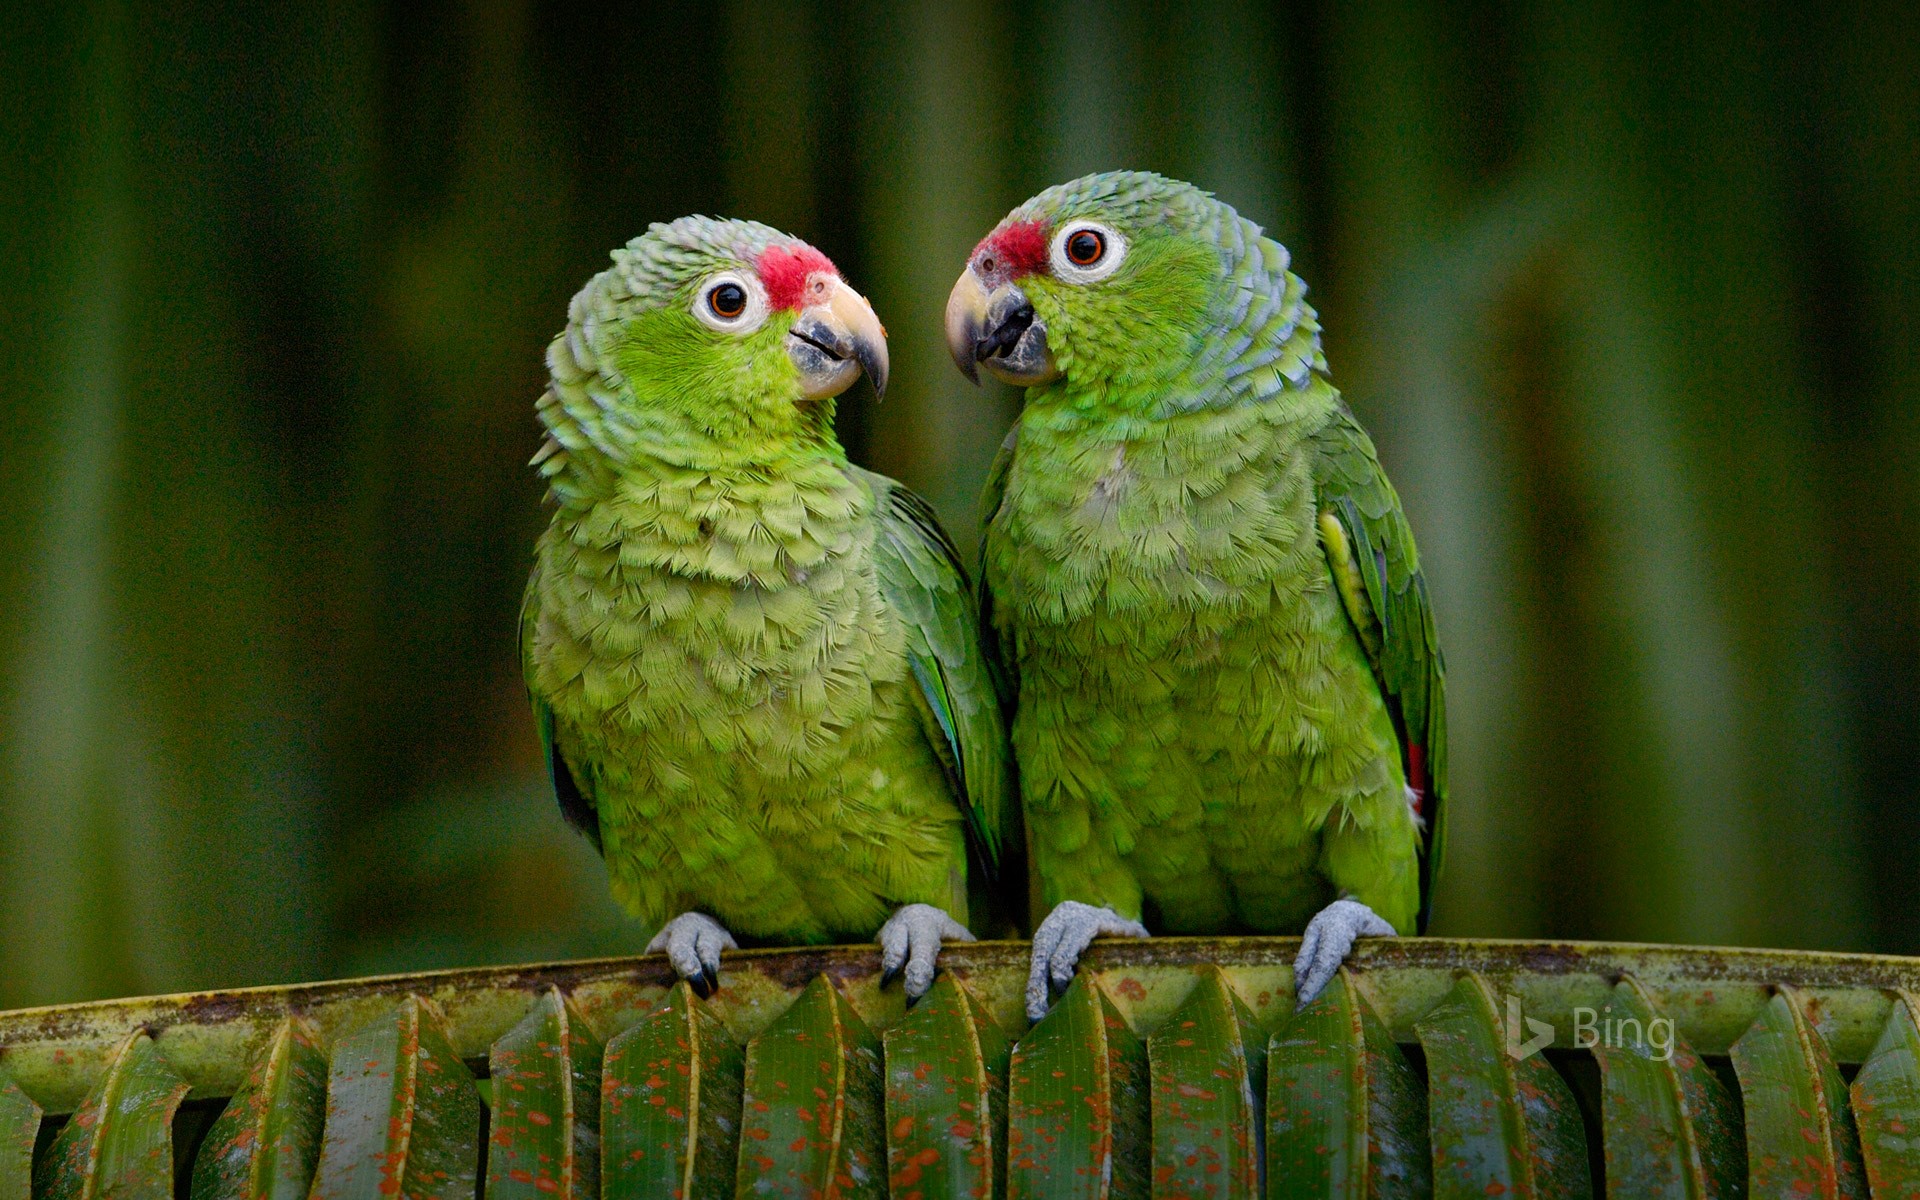 Red-lored parrots in Ecuador